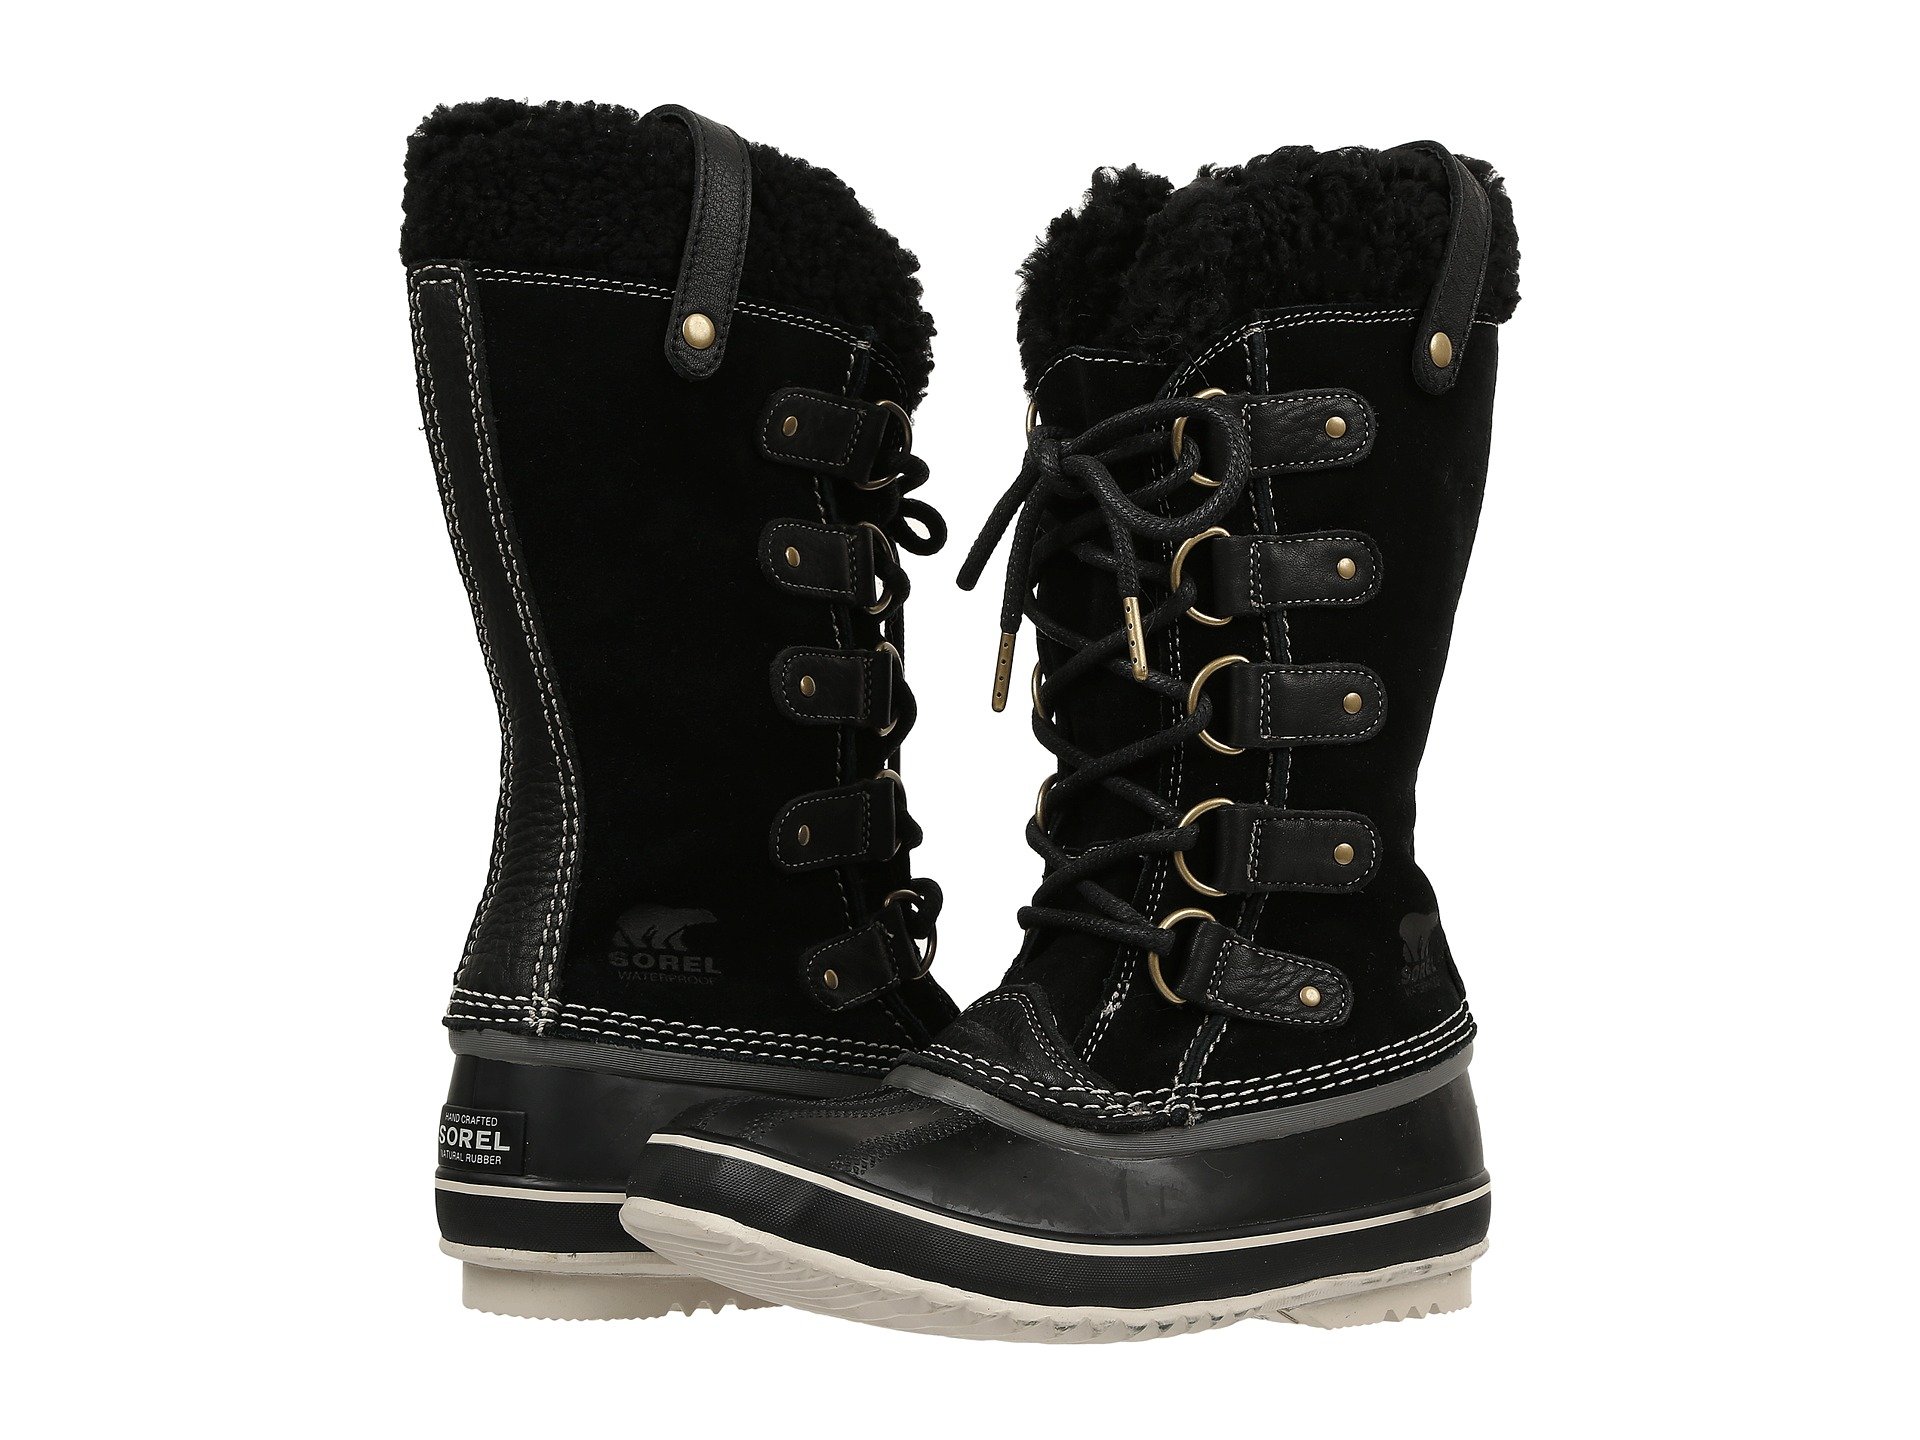 sorel joan of arctic boots pair ... eqhxghz